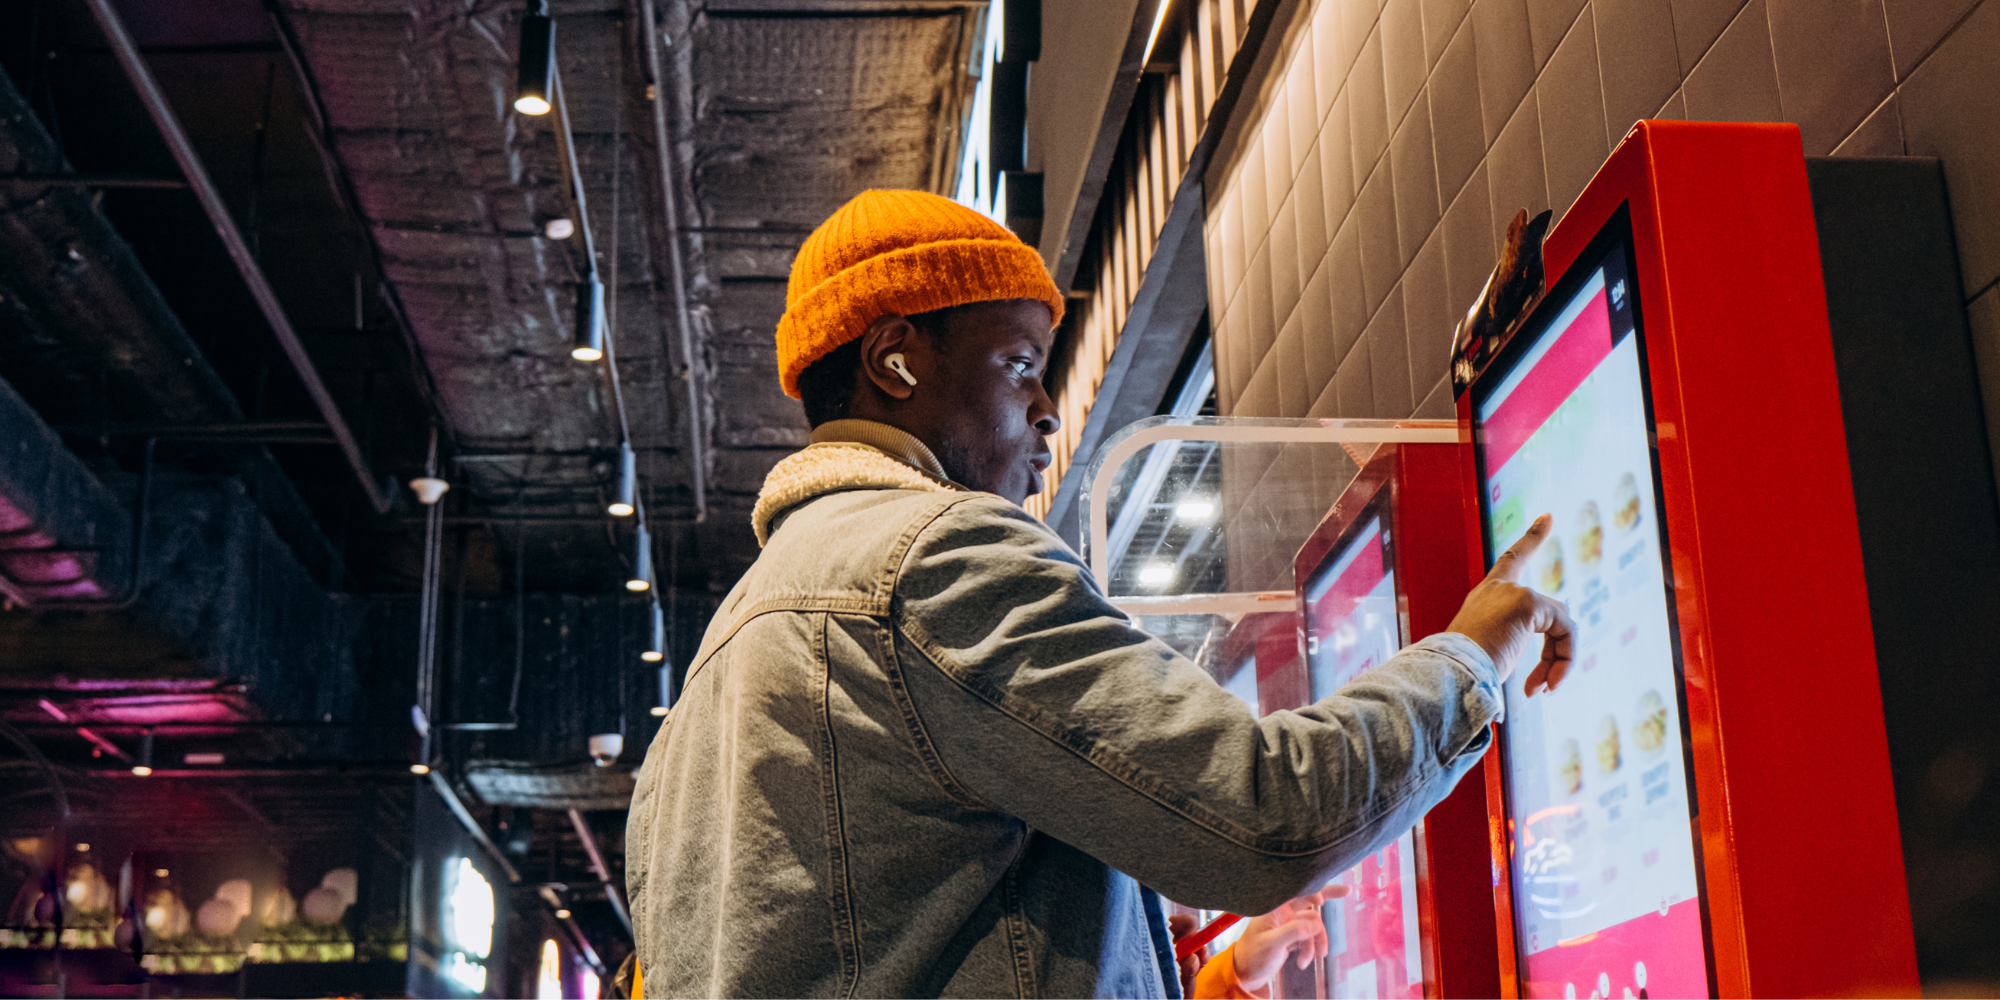 man uses digital signage self-service kiosk display to order a snack